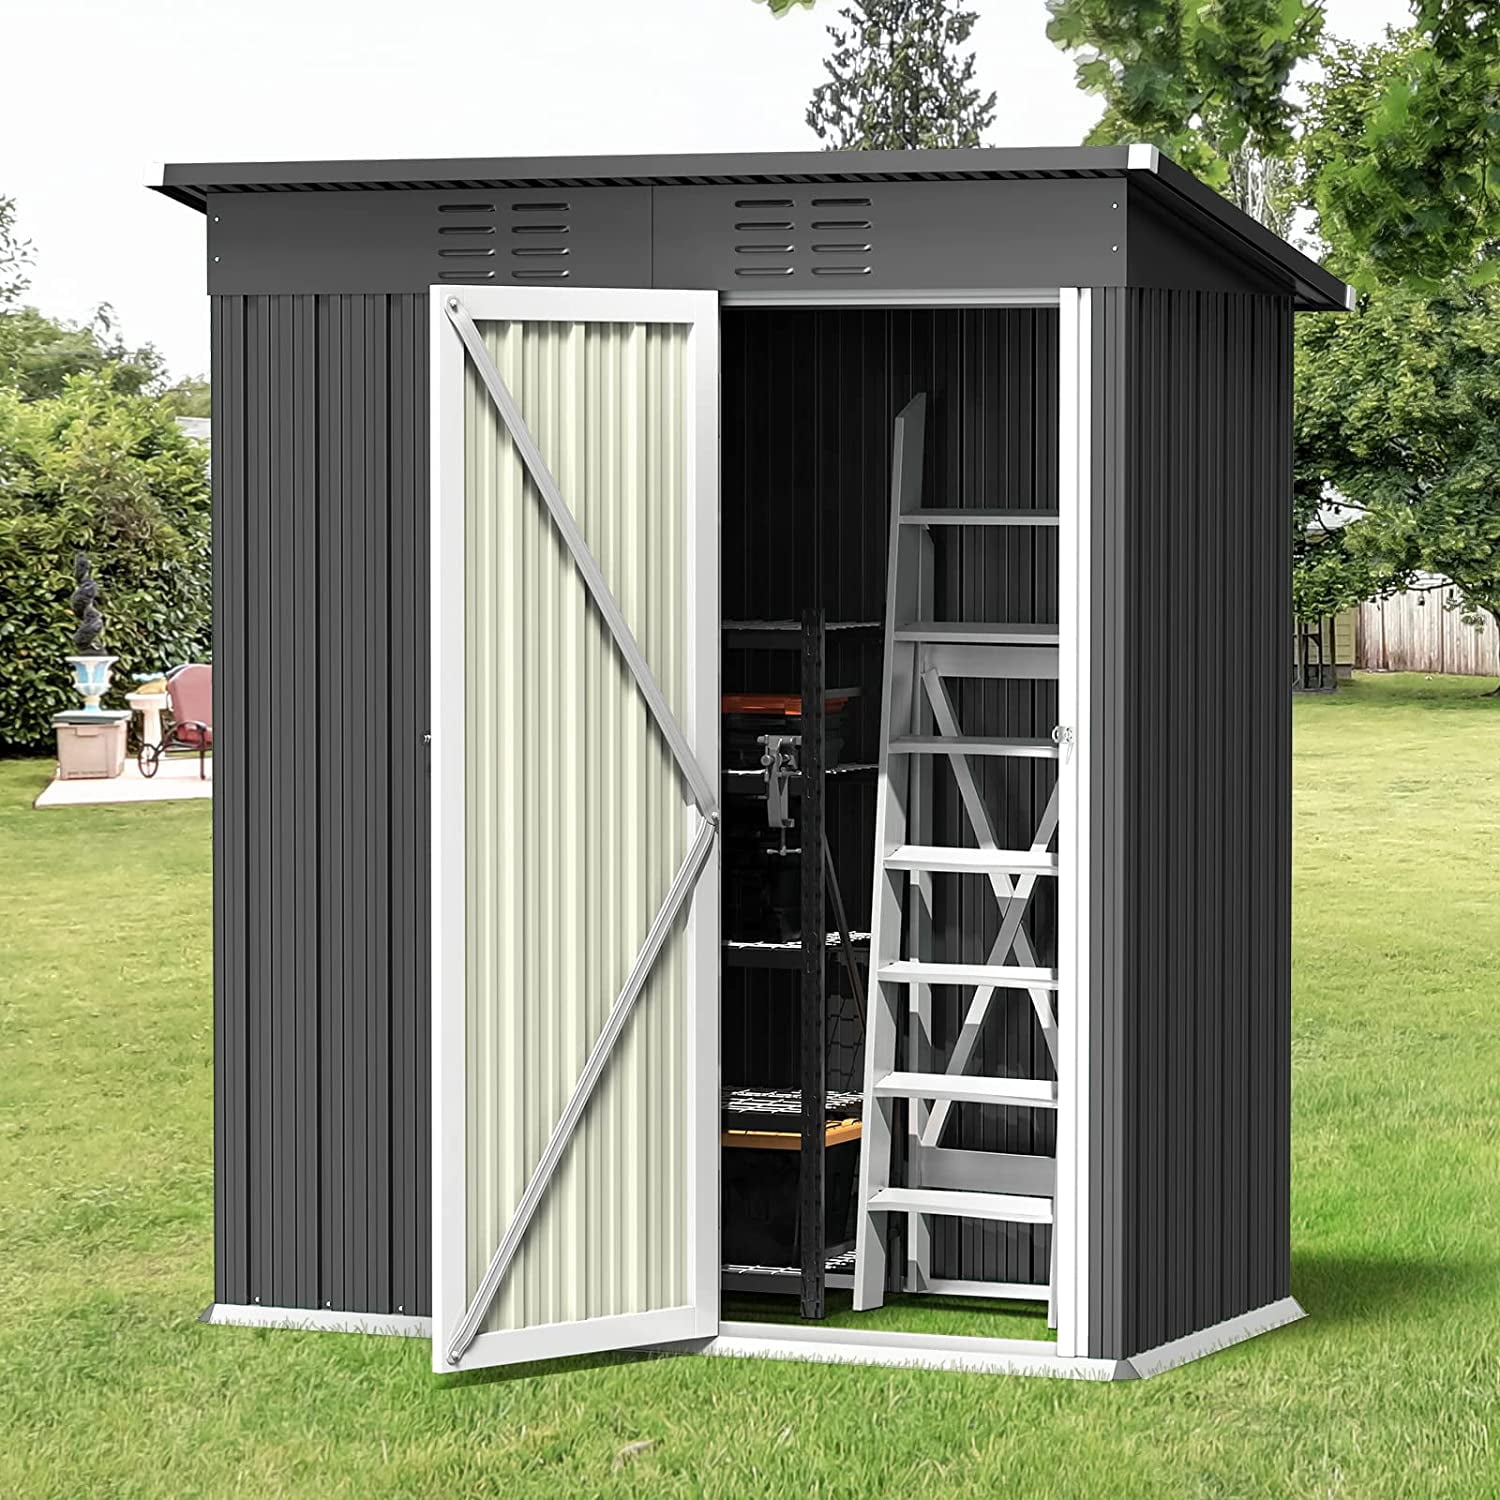 Devoko Outdoor Storage Shed 6 x 4 FT Lockable Metal Garden Shed Steel Anti-Corrosion Storage House with Double Lockable Door for Backyard Outdoor Patio 6' x 4' 